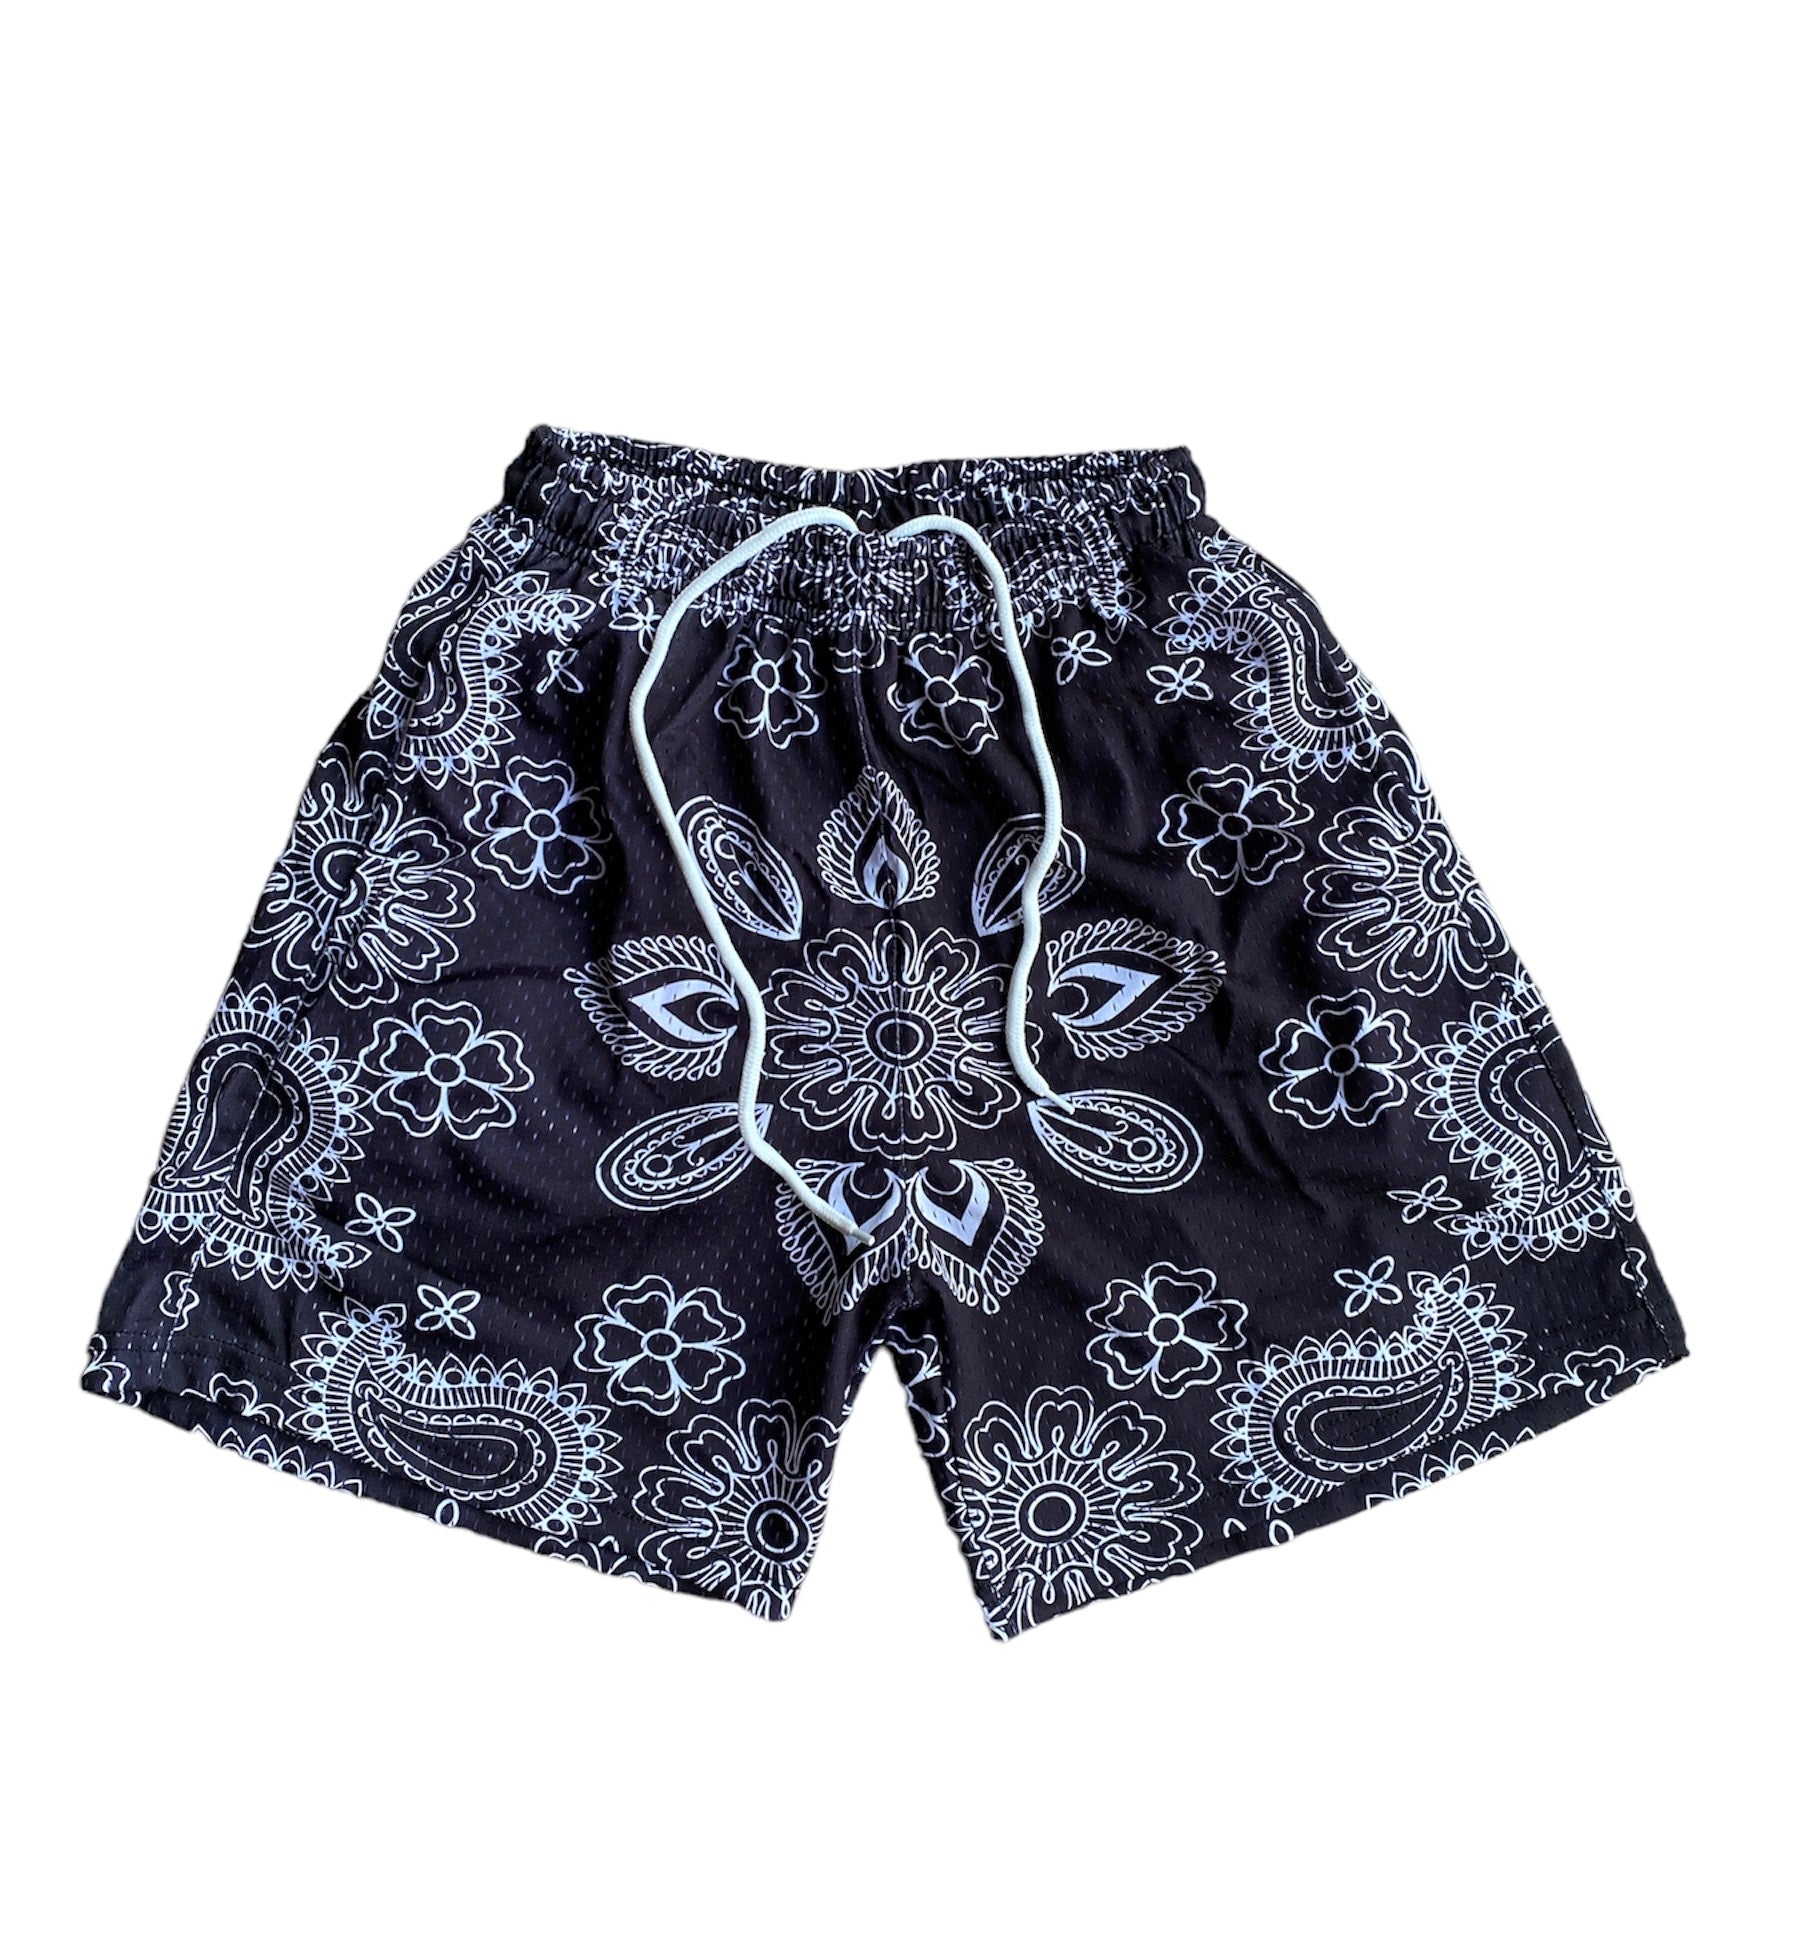  ksotutm Shorts for Women Bandana Fashion Paisley Print